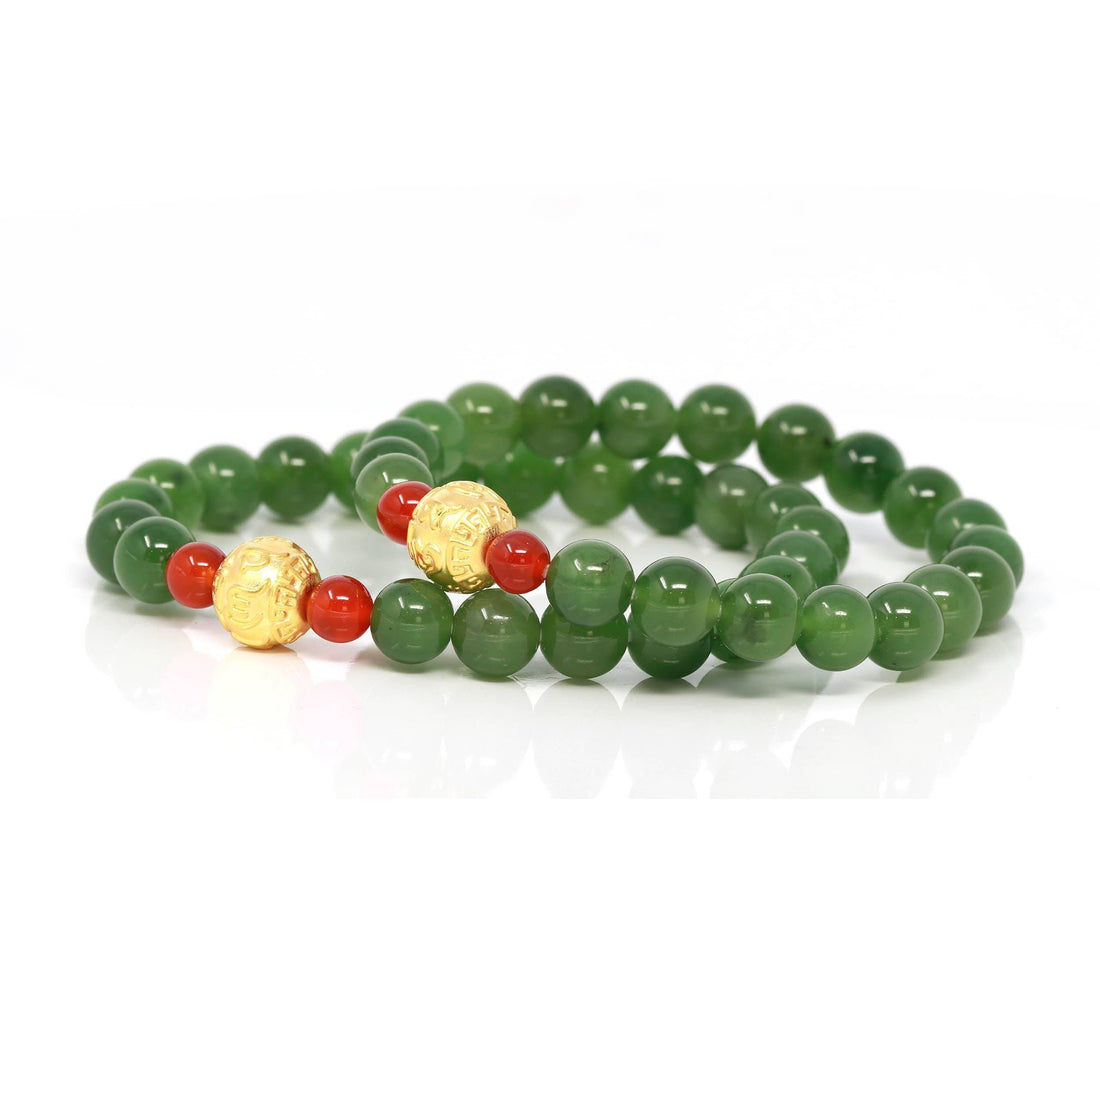 Share 177+ buddhist wrist bracelet best